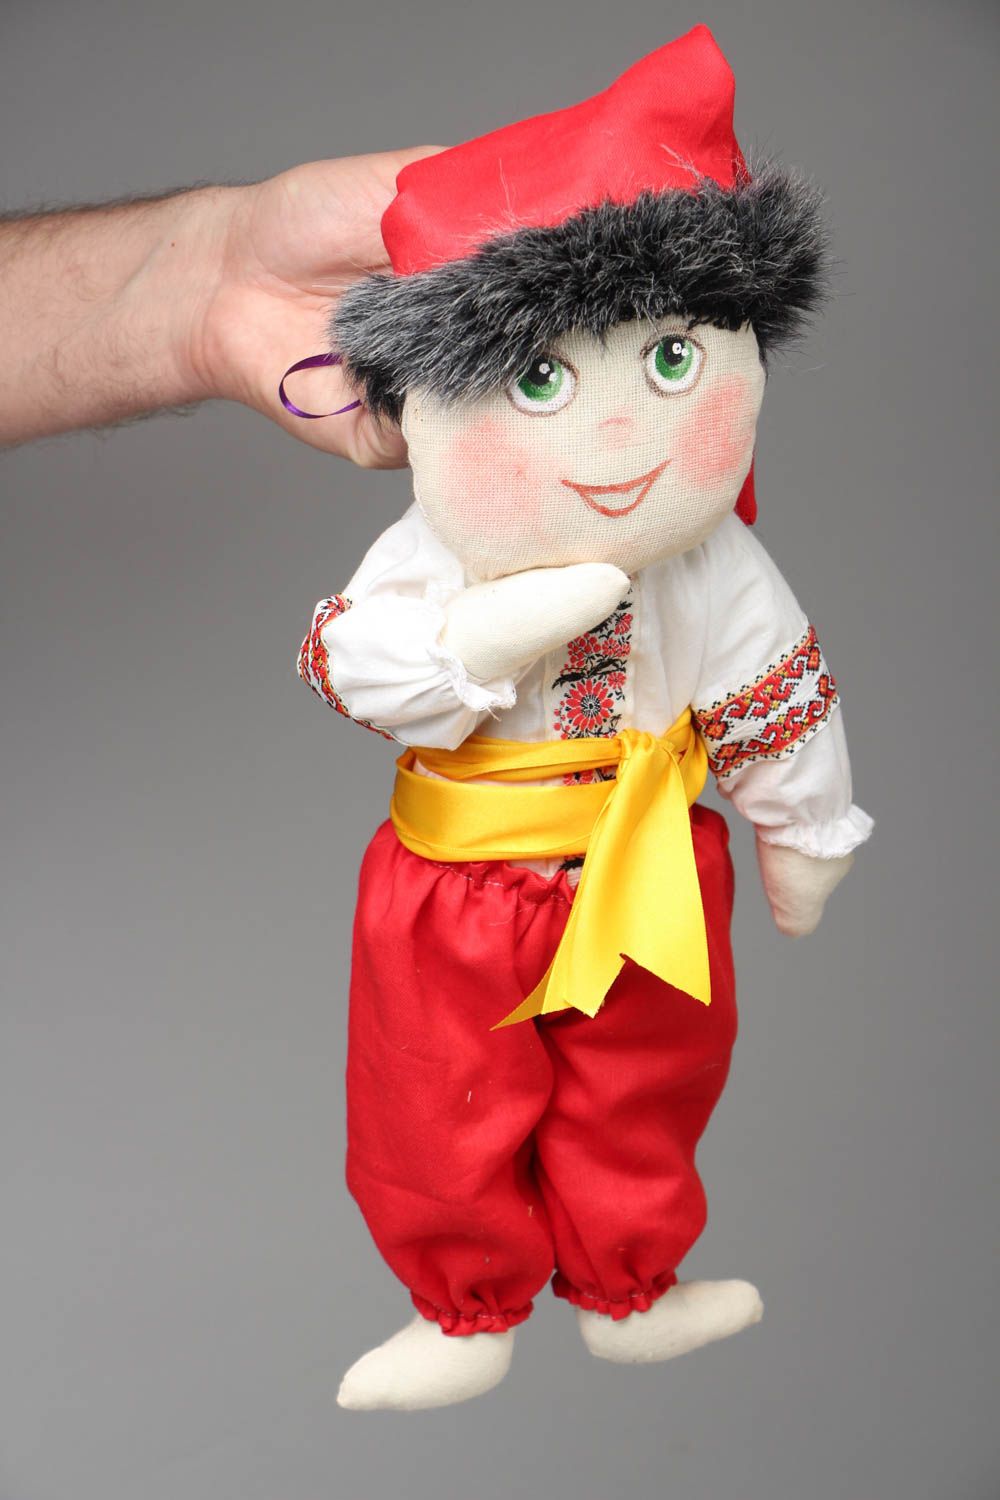 Textil Puppe Junge in Ethno Kleidung foto 4